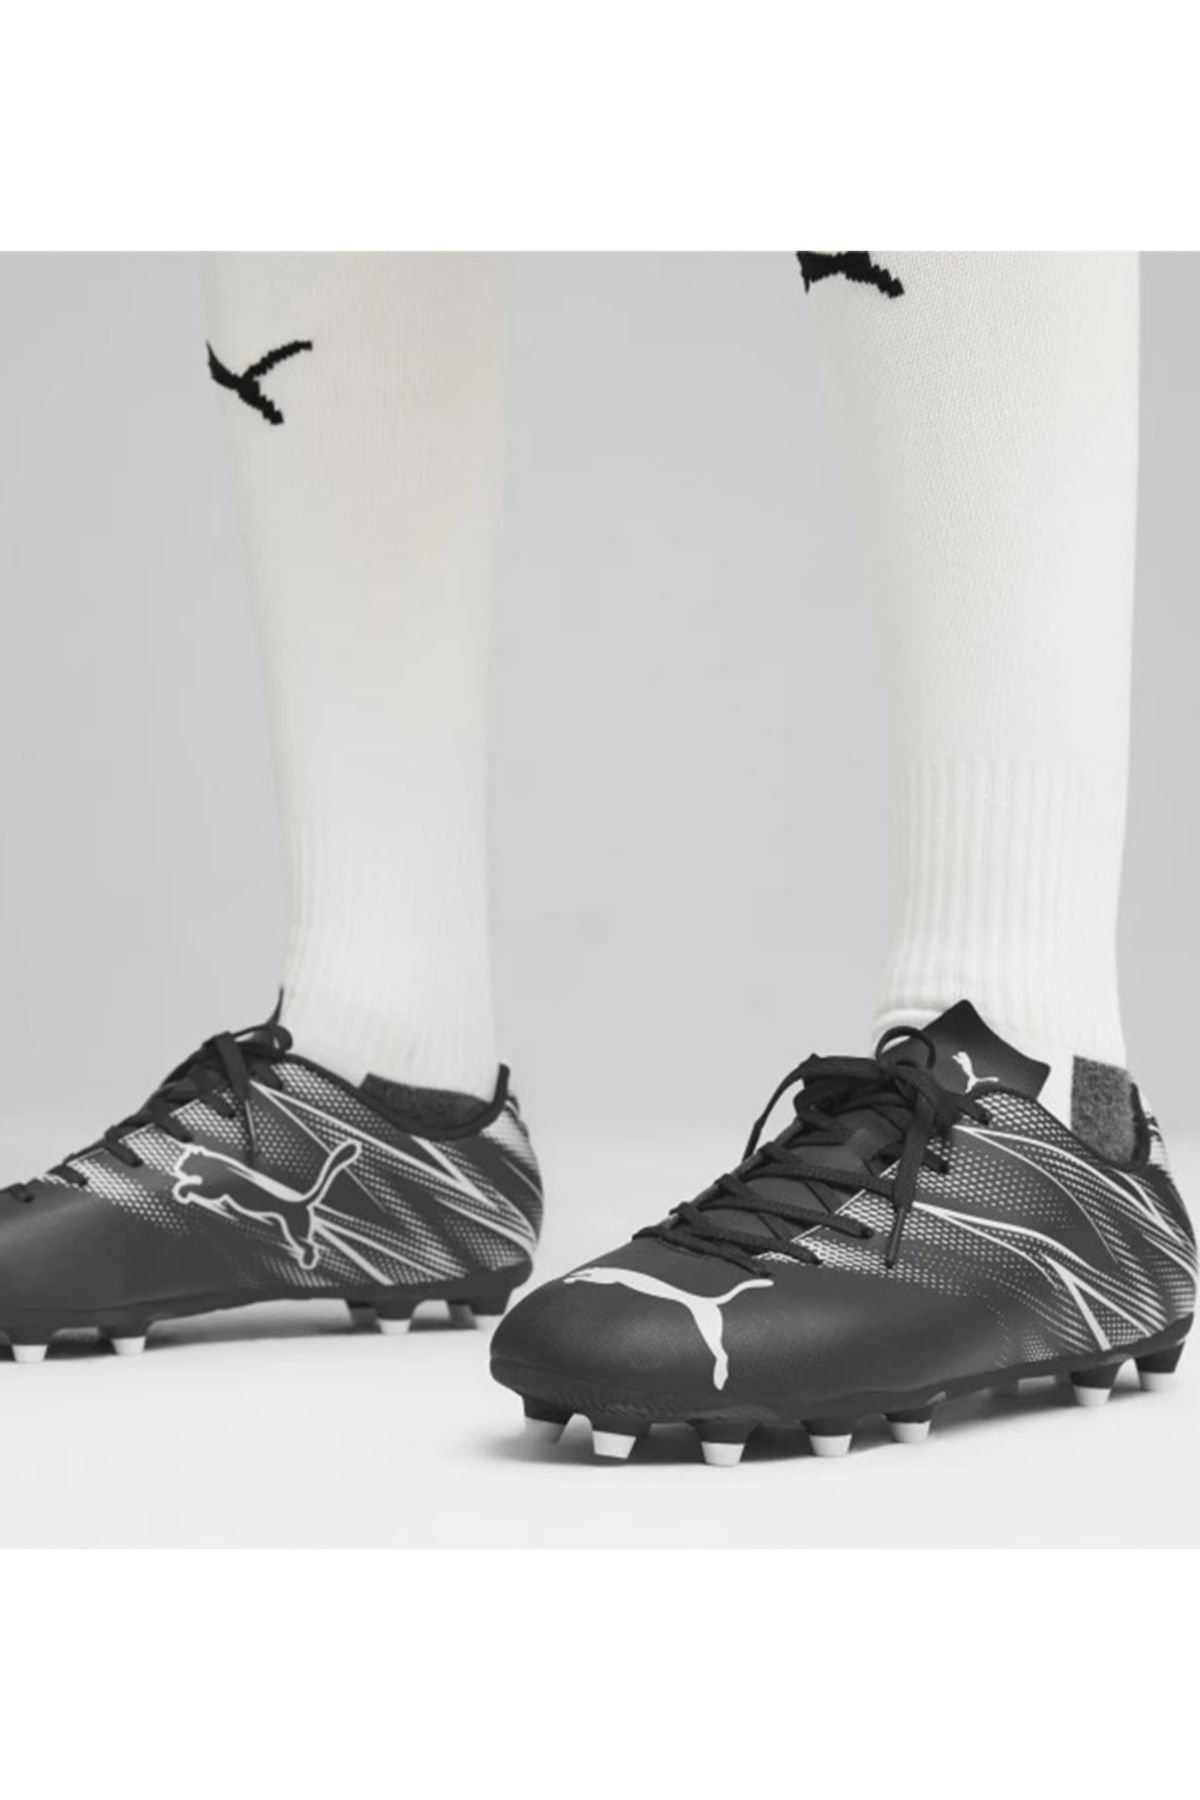 Puma Erkek Çim Halı Saha Dişli Krampon Futbol Ayakkabı